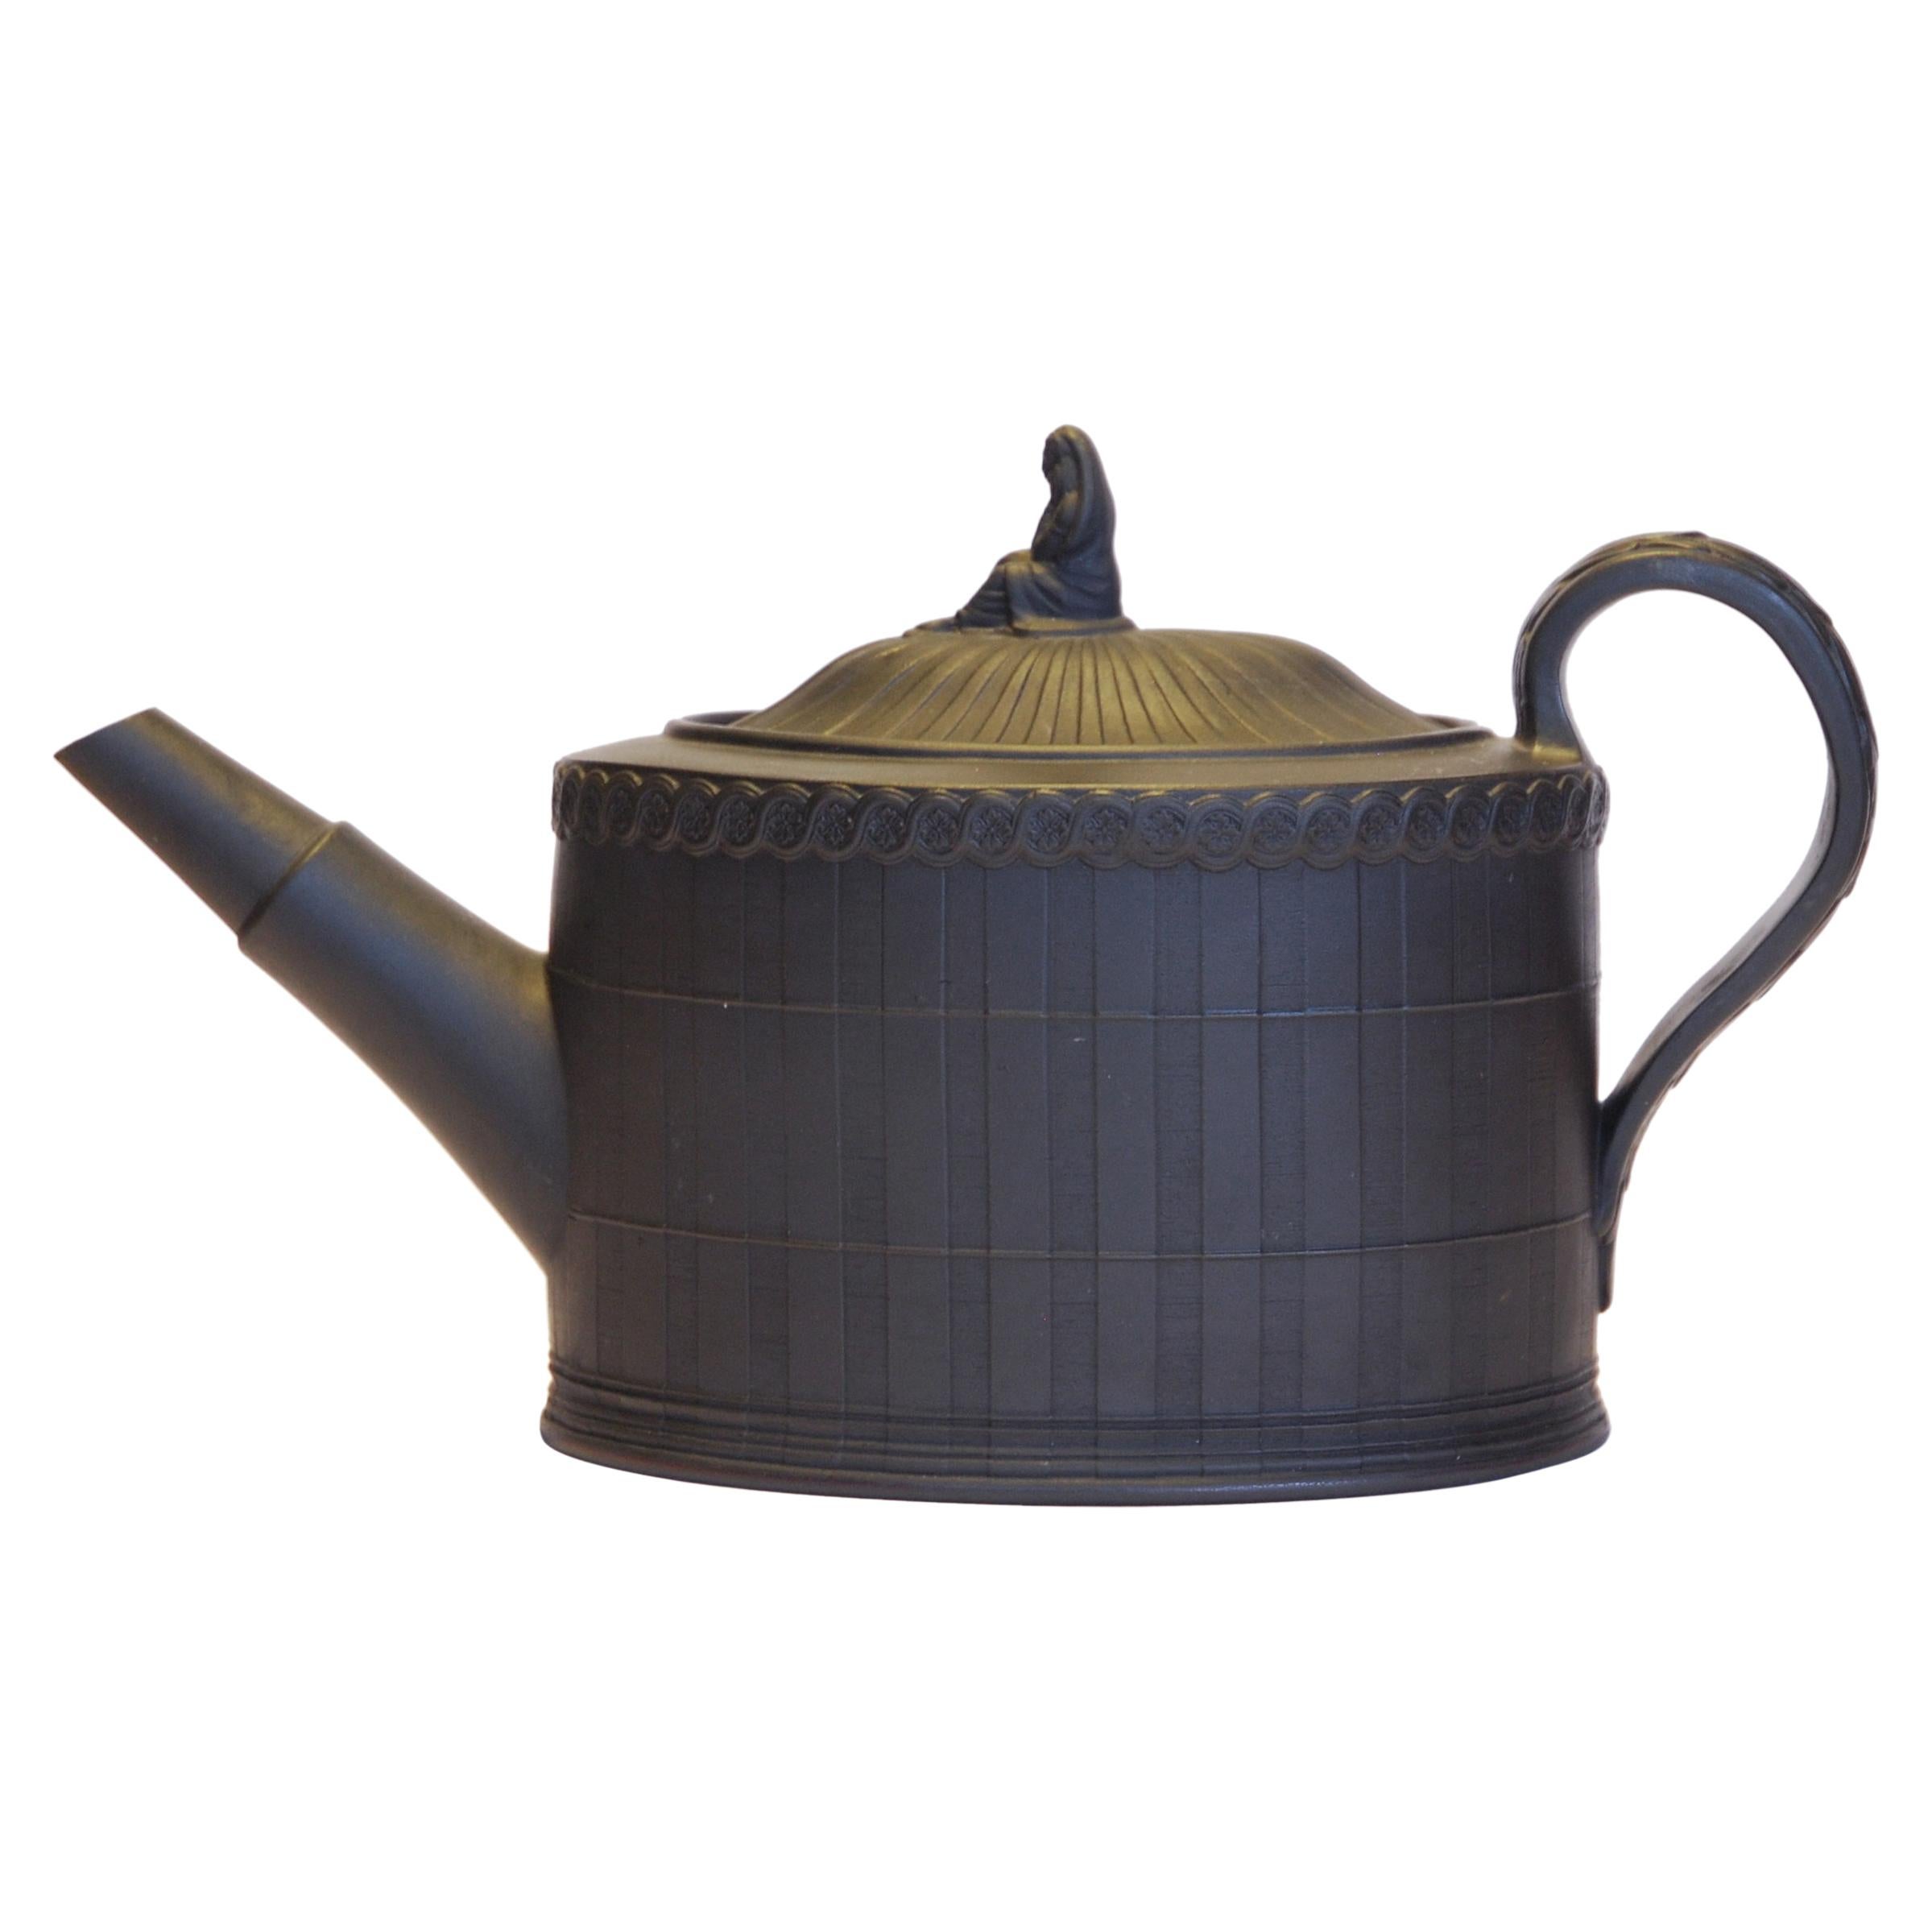 Oval Teapot in Black Basalt, Turner, circa 1790